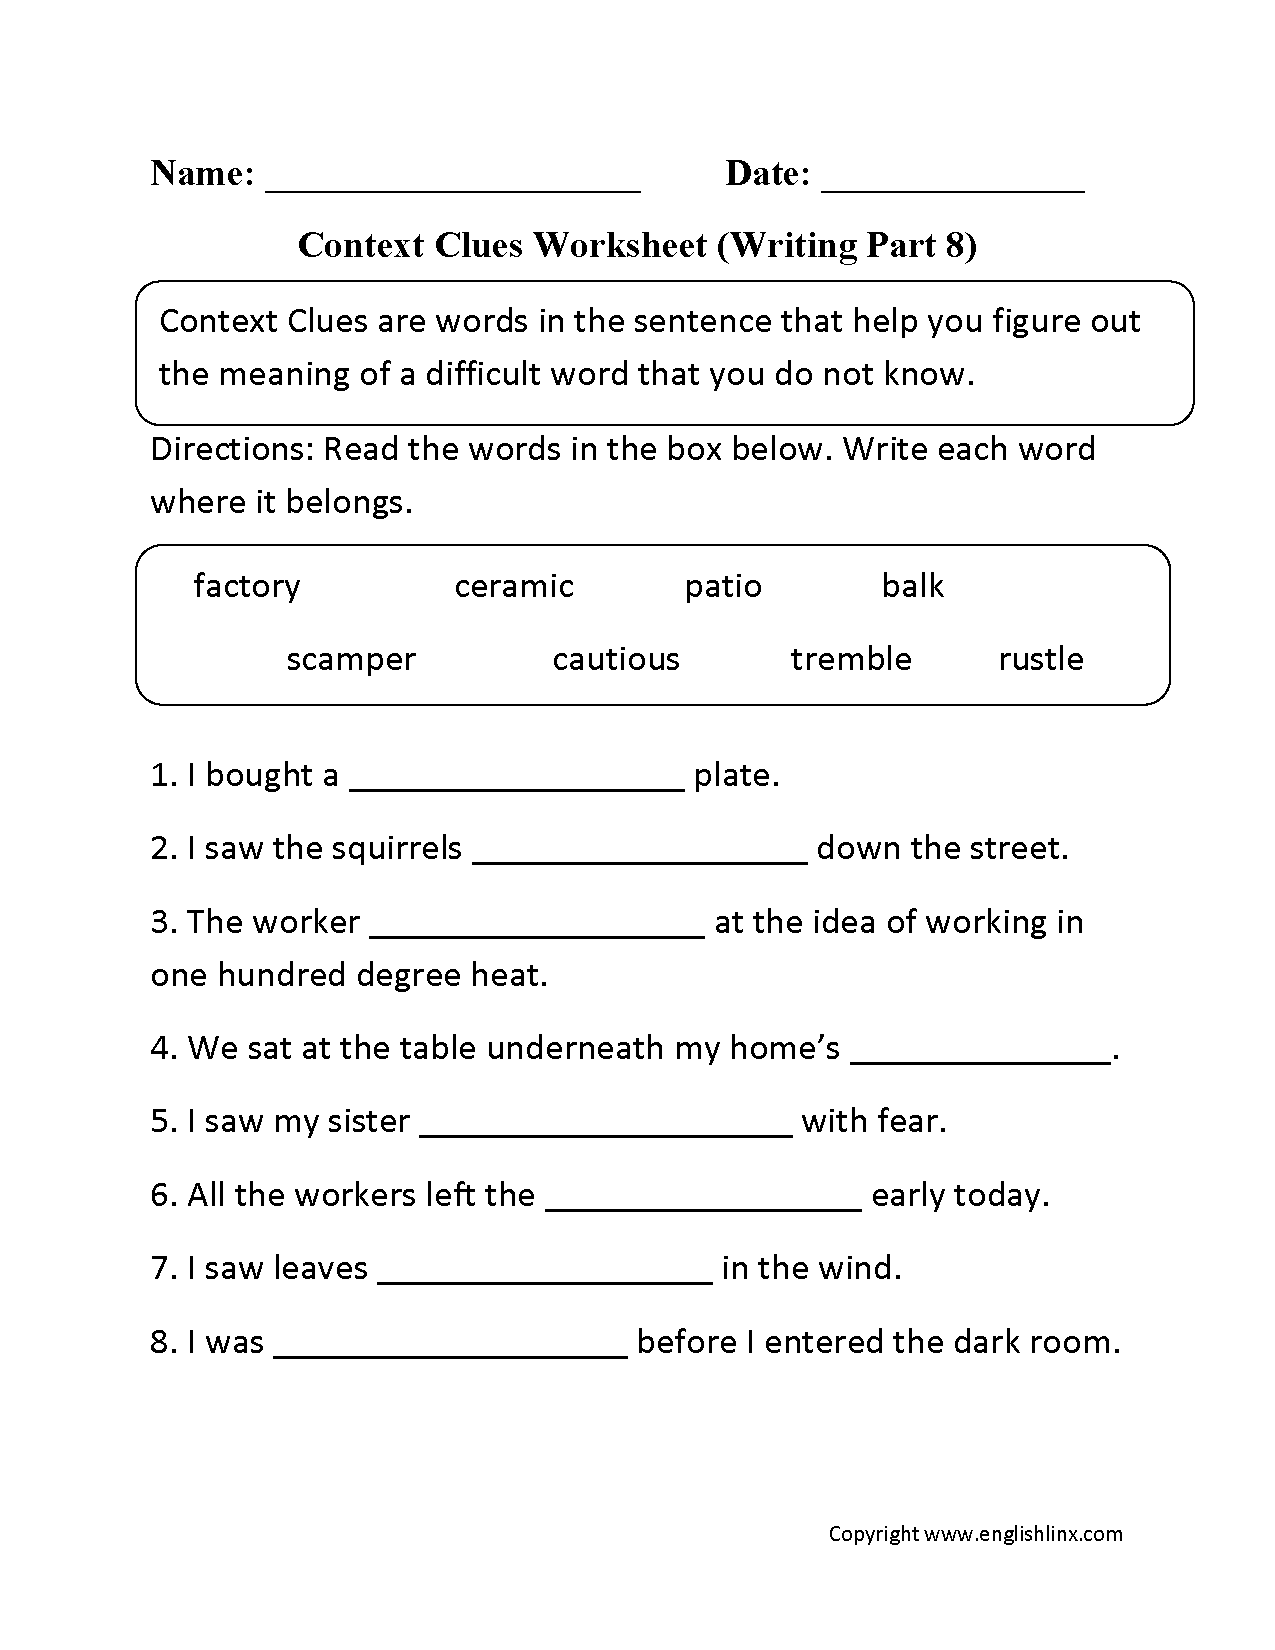 Context Clues Worksheet Writing Part 8 Intermediate